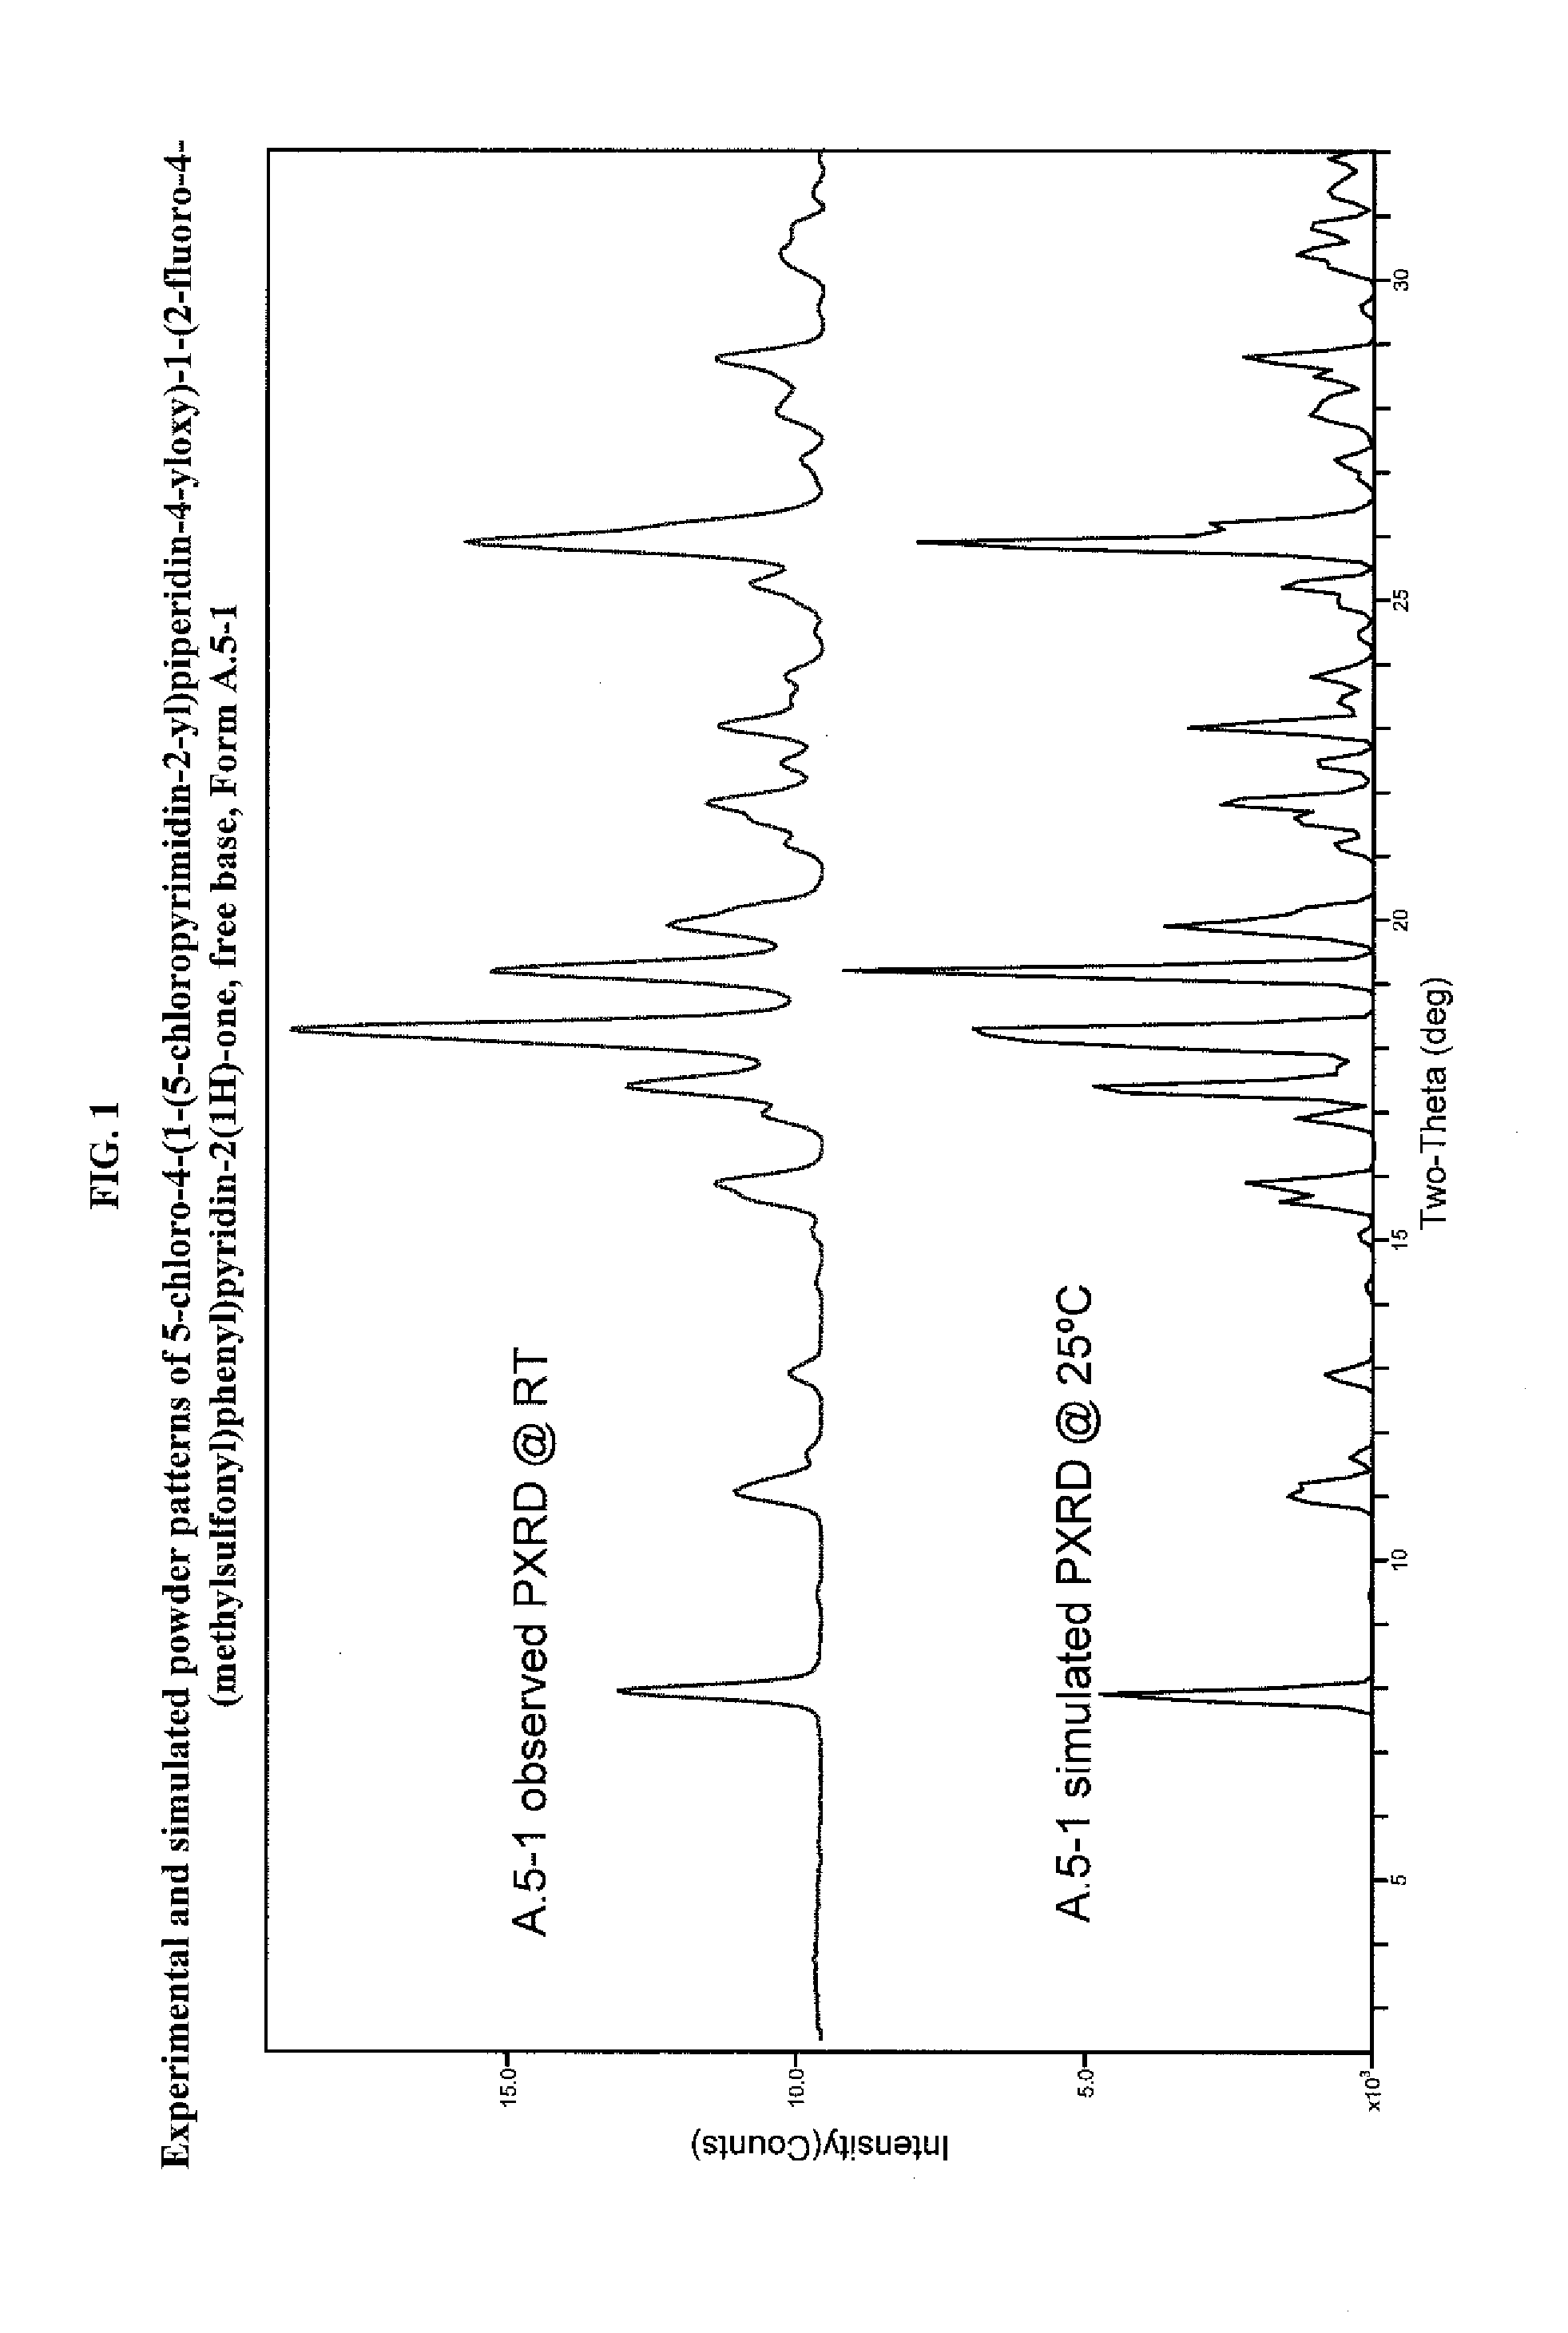 Pyrimidinylpiperidinyloxypyridinone analogues as gpr119 modulators